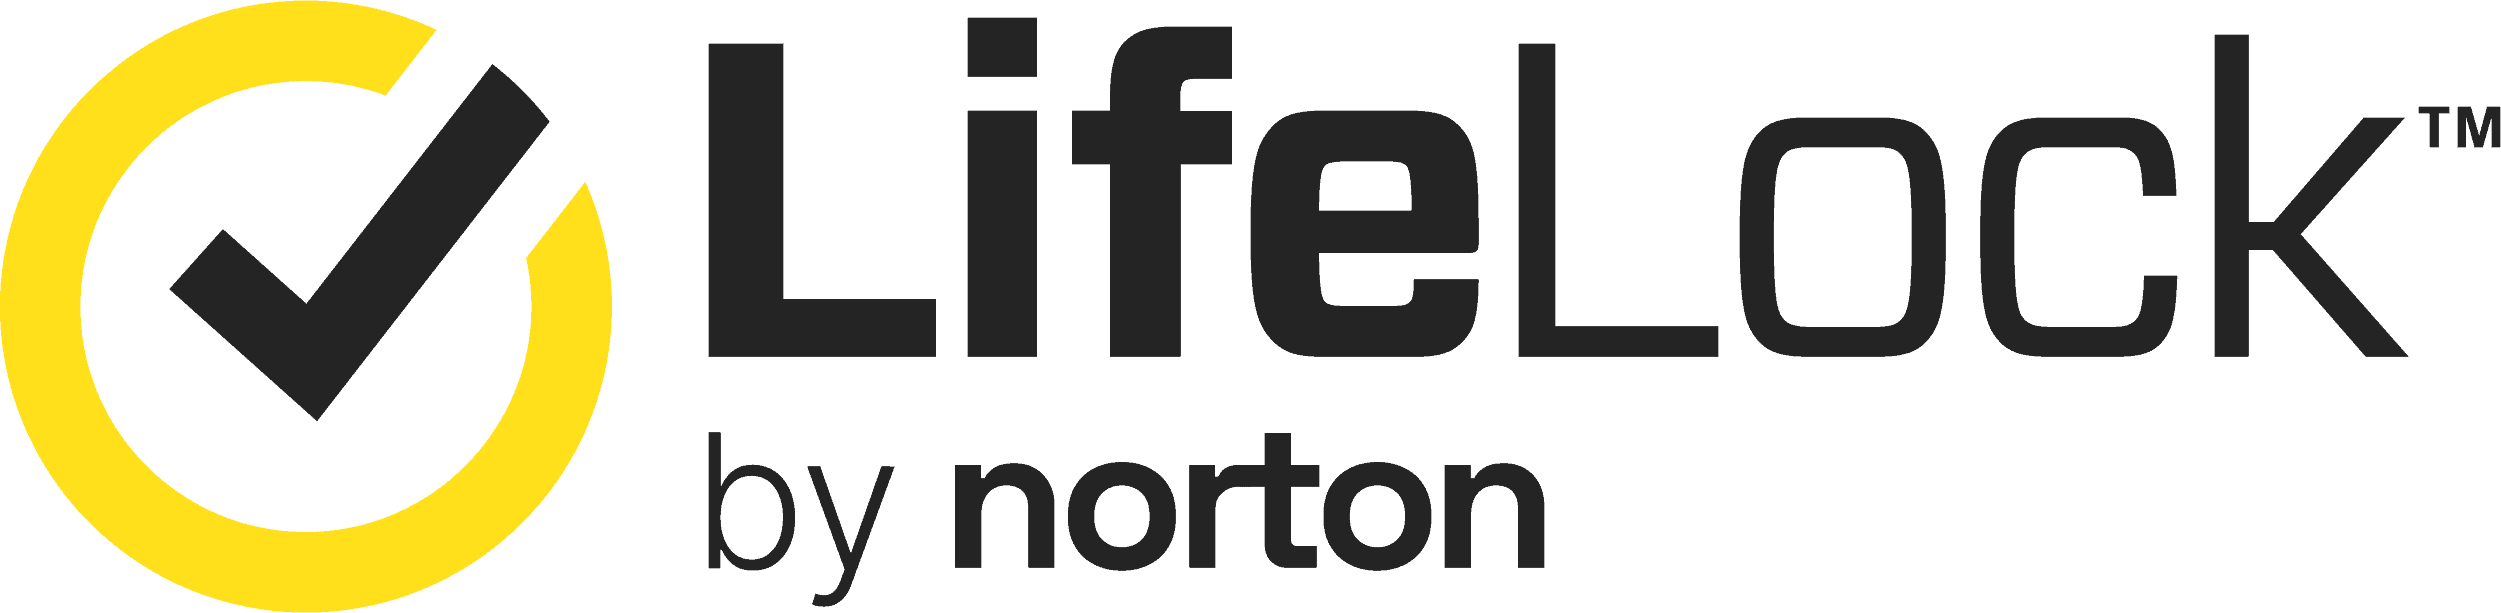 NortonLifeLock Logo